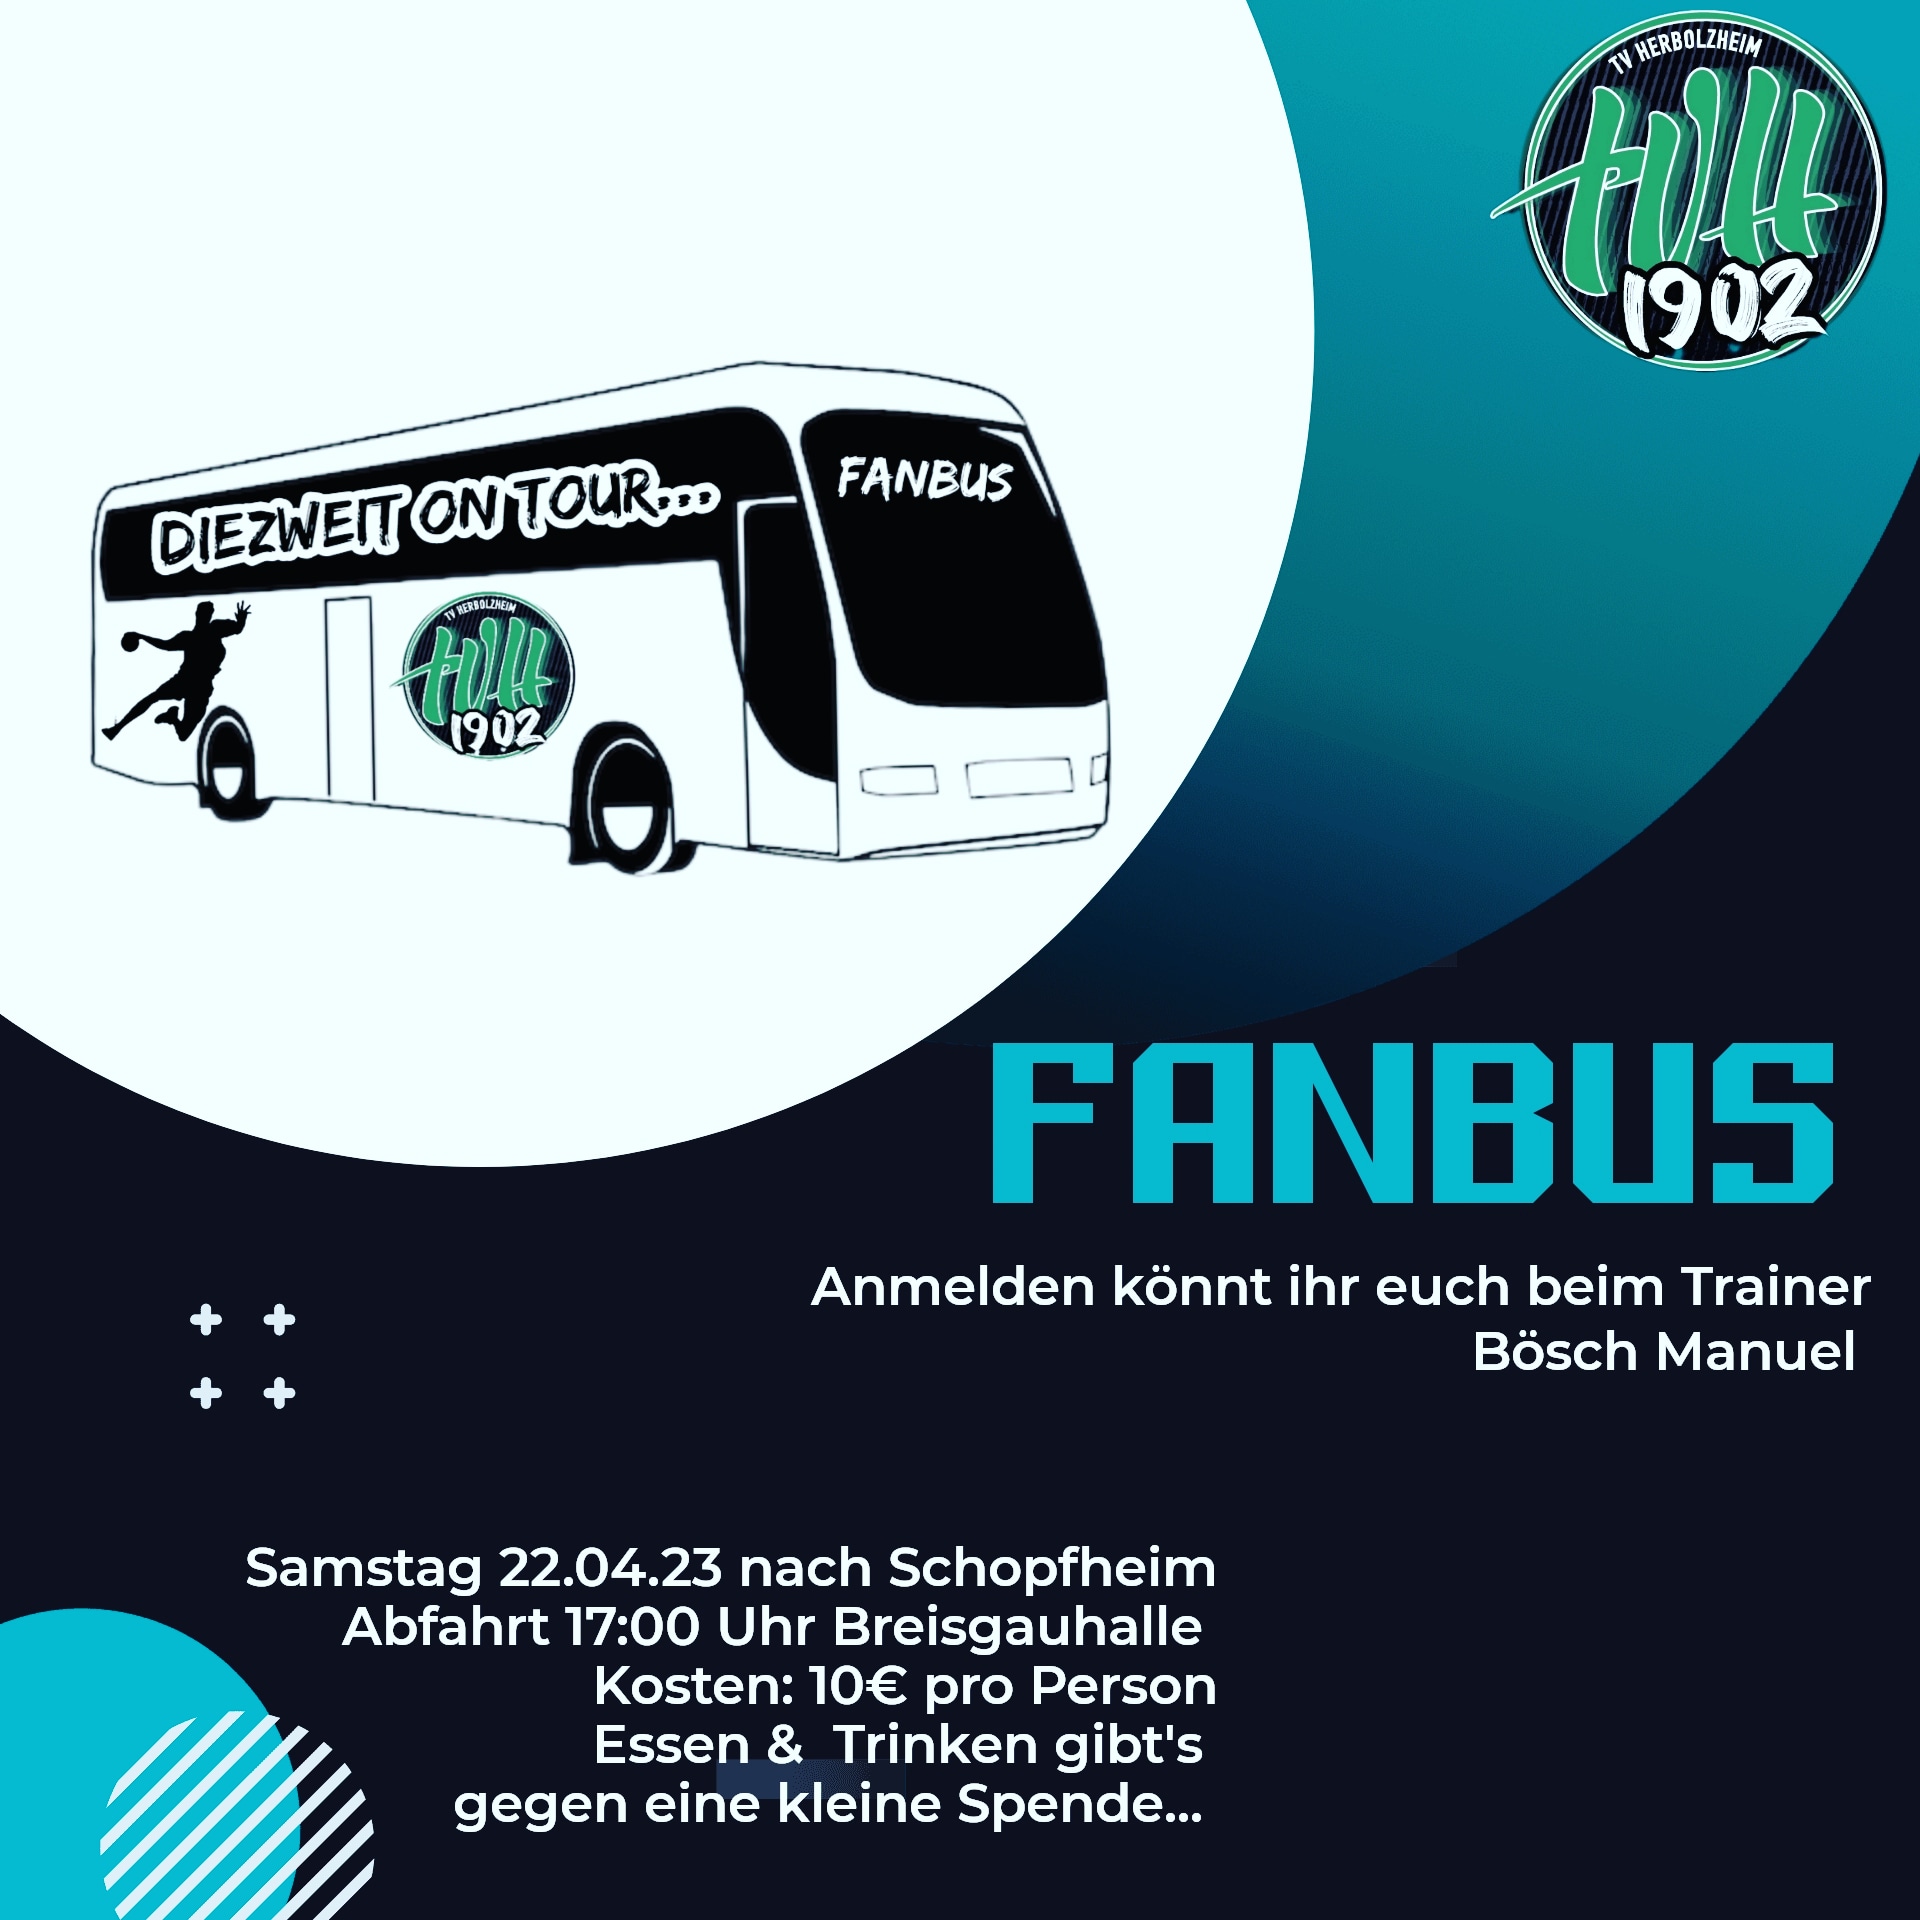 Fanbus TVH2